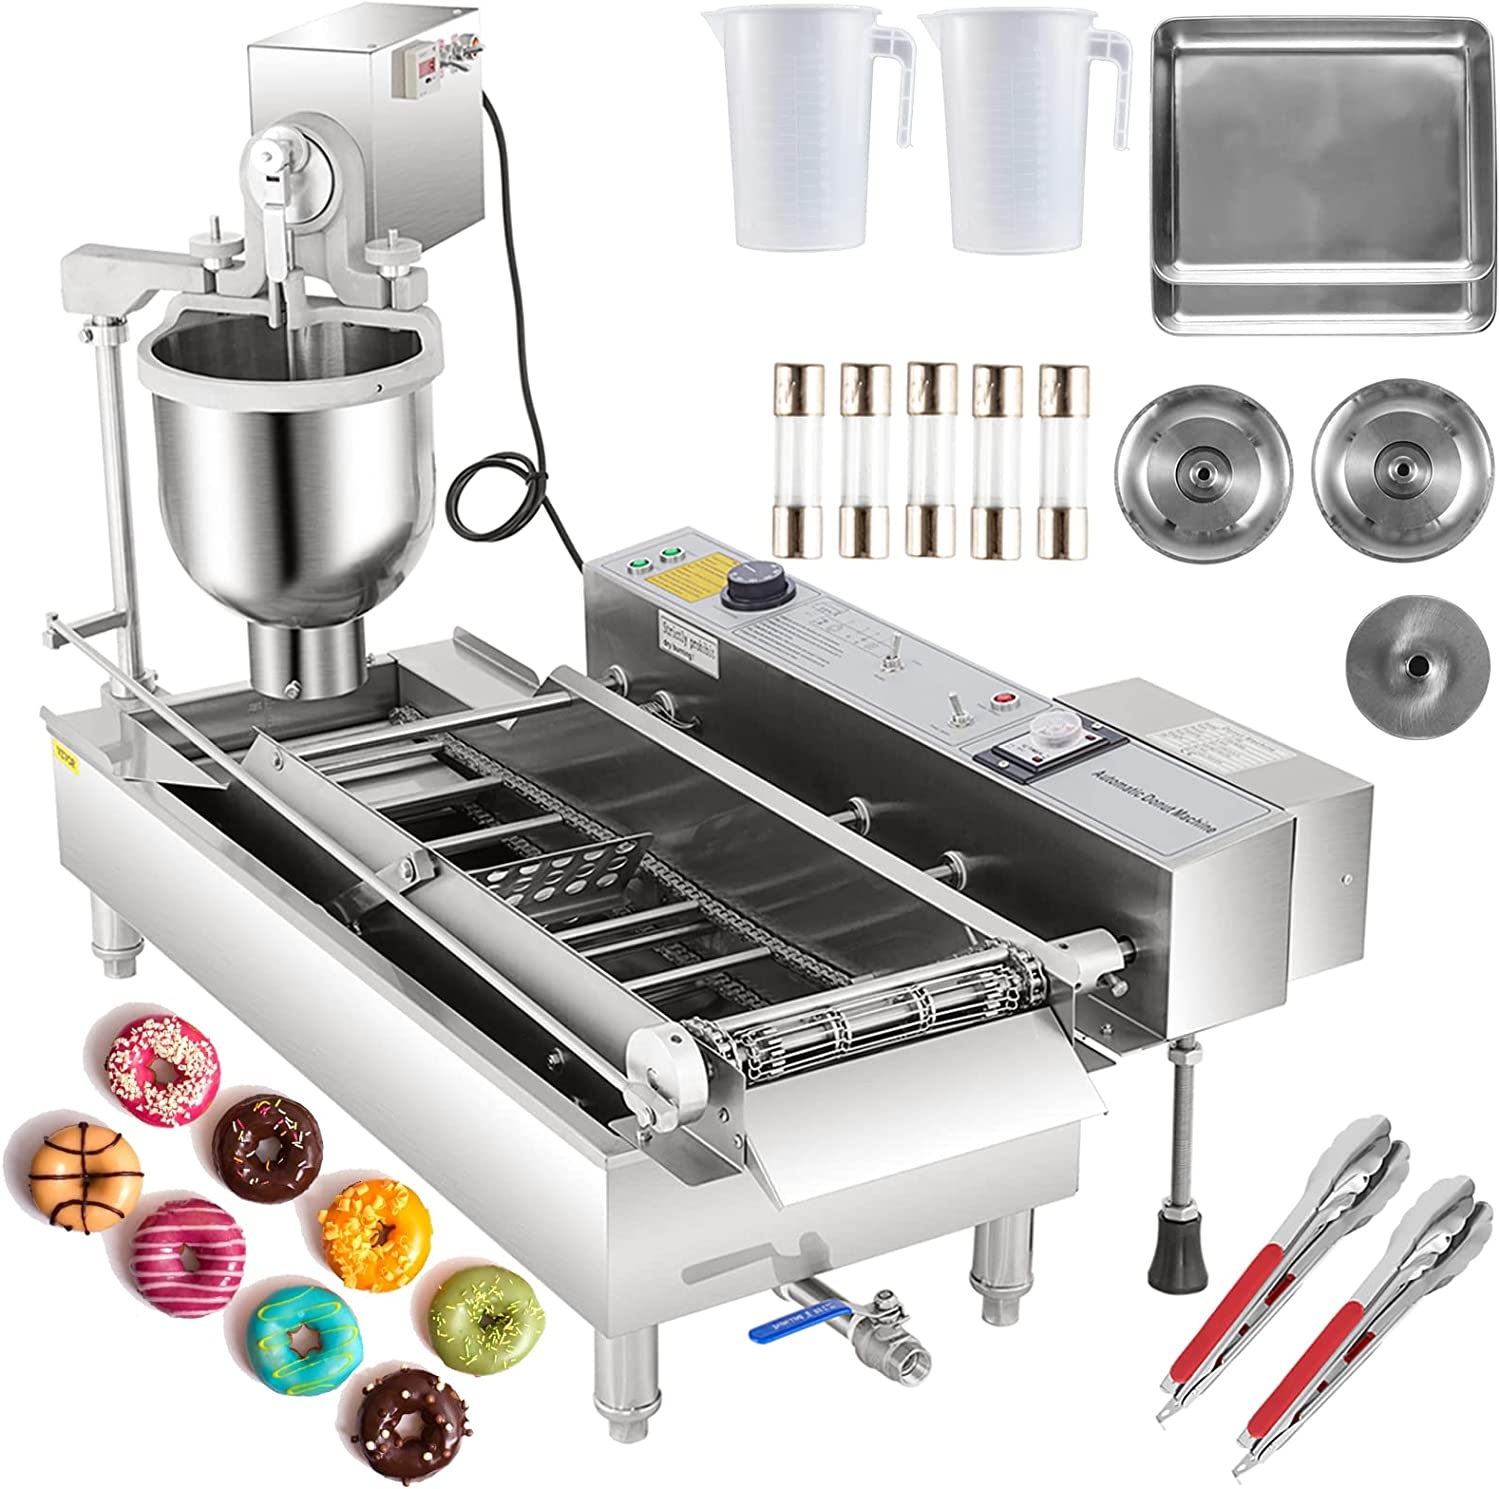 VEVOR 110V Commercial Automatic Donut Making Machine, 6 Rows Auto Doughnut Maker 9.5L Hopper, Intelligent Control Panel,